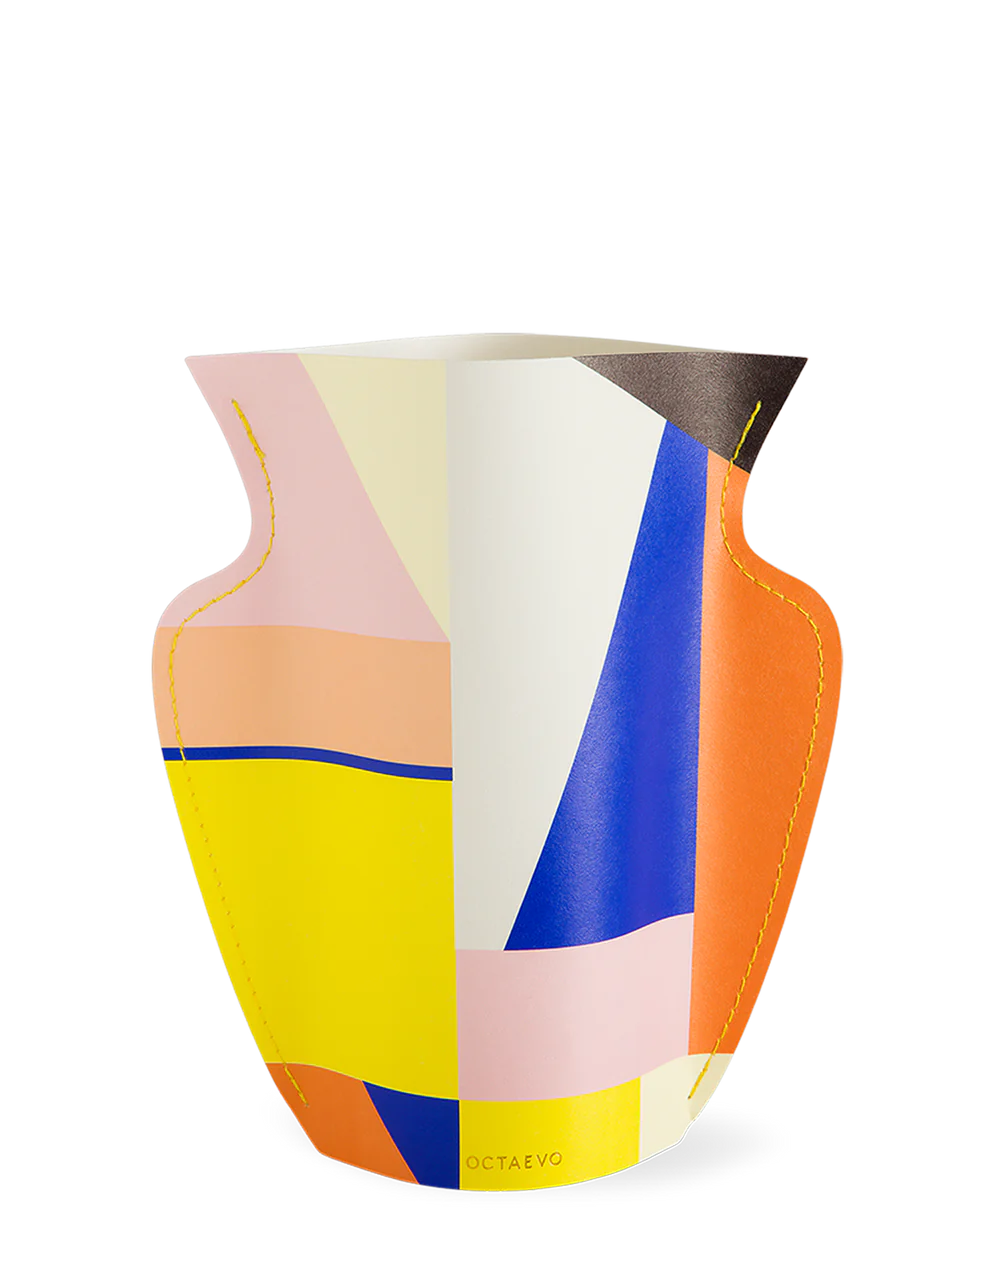 Mini Paper Vase Bazaar